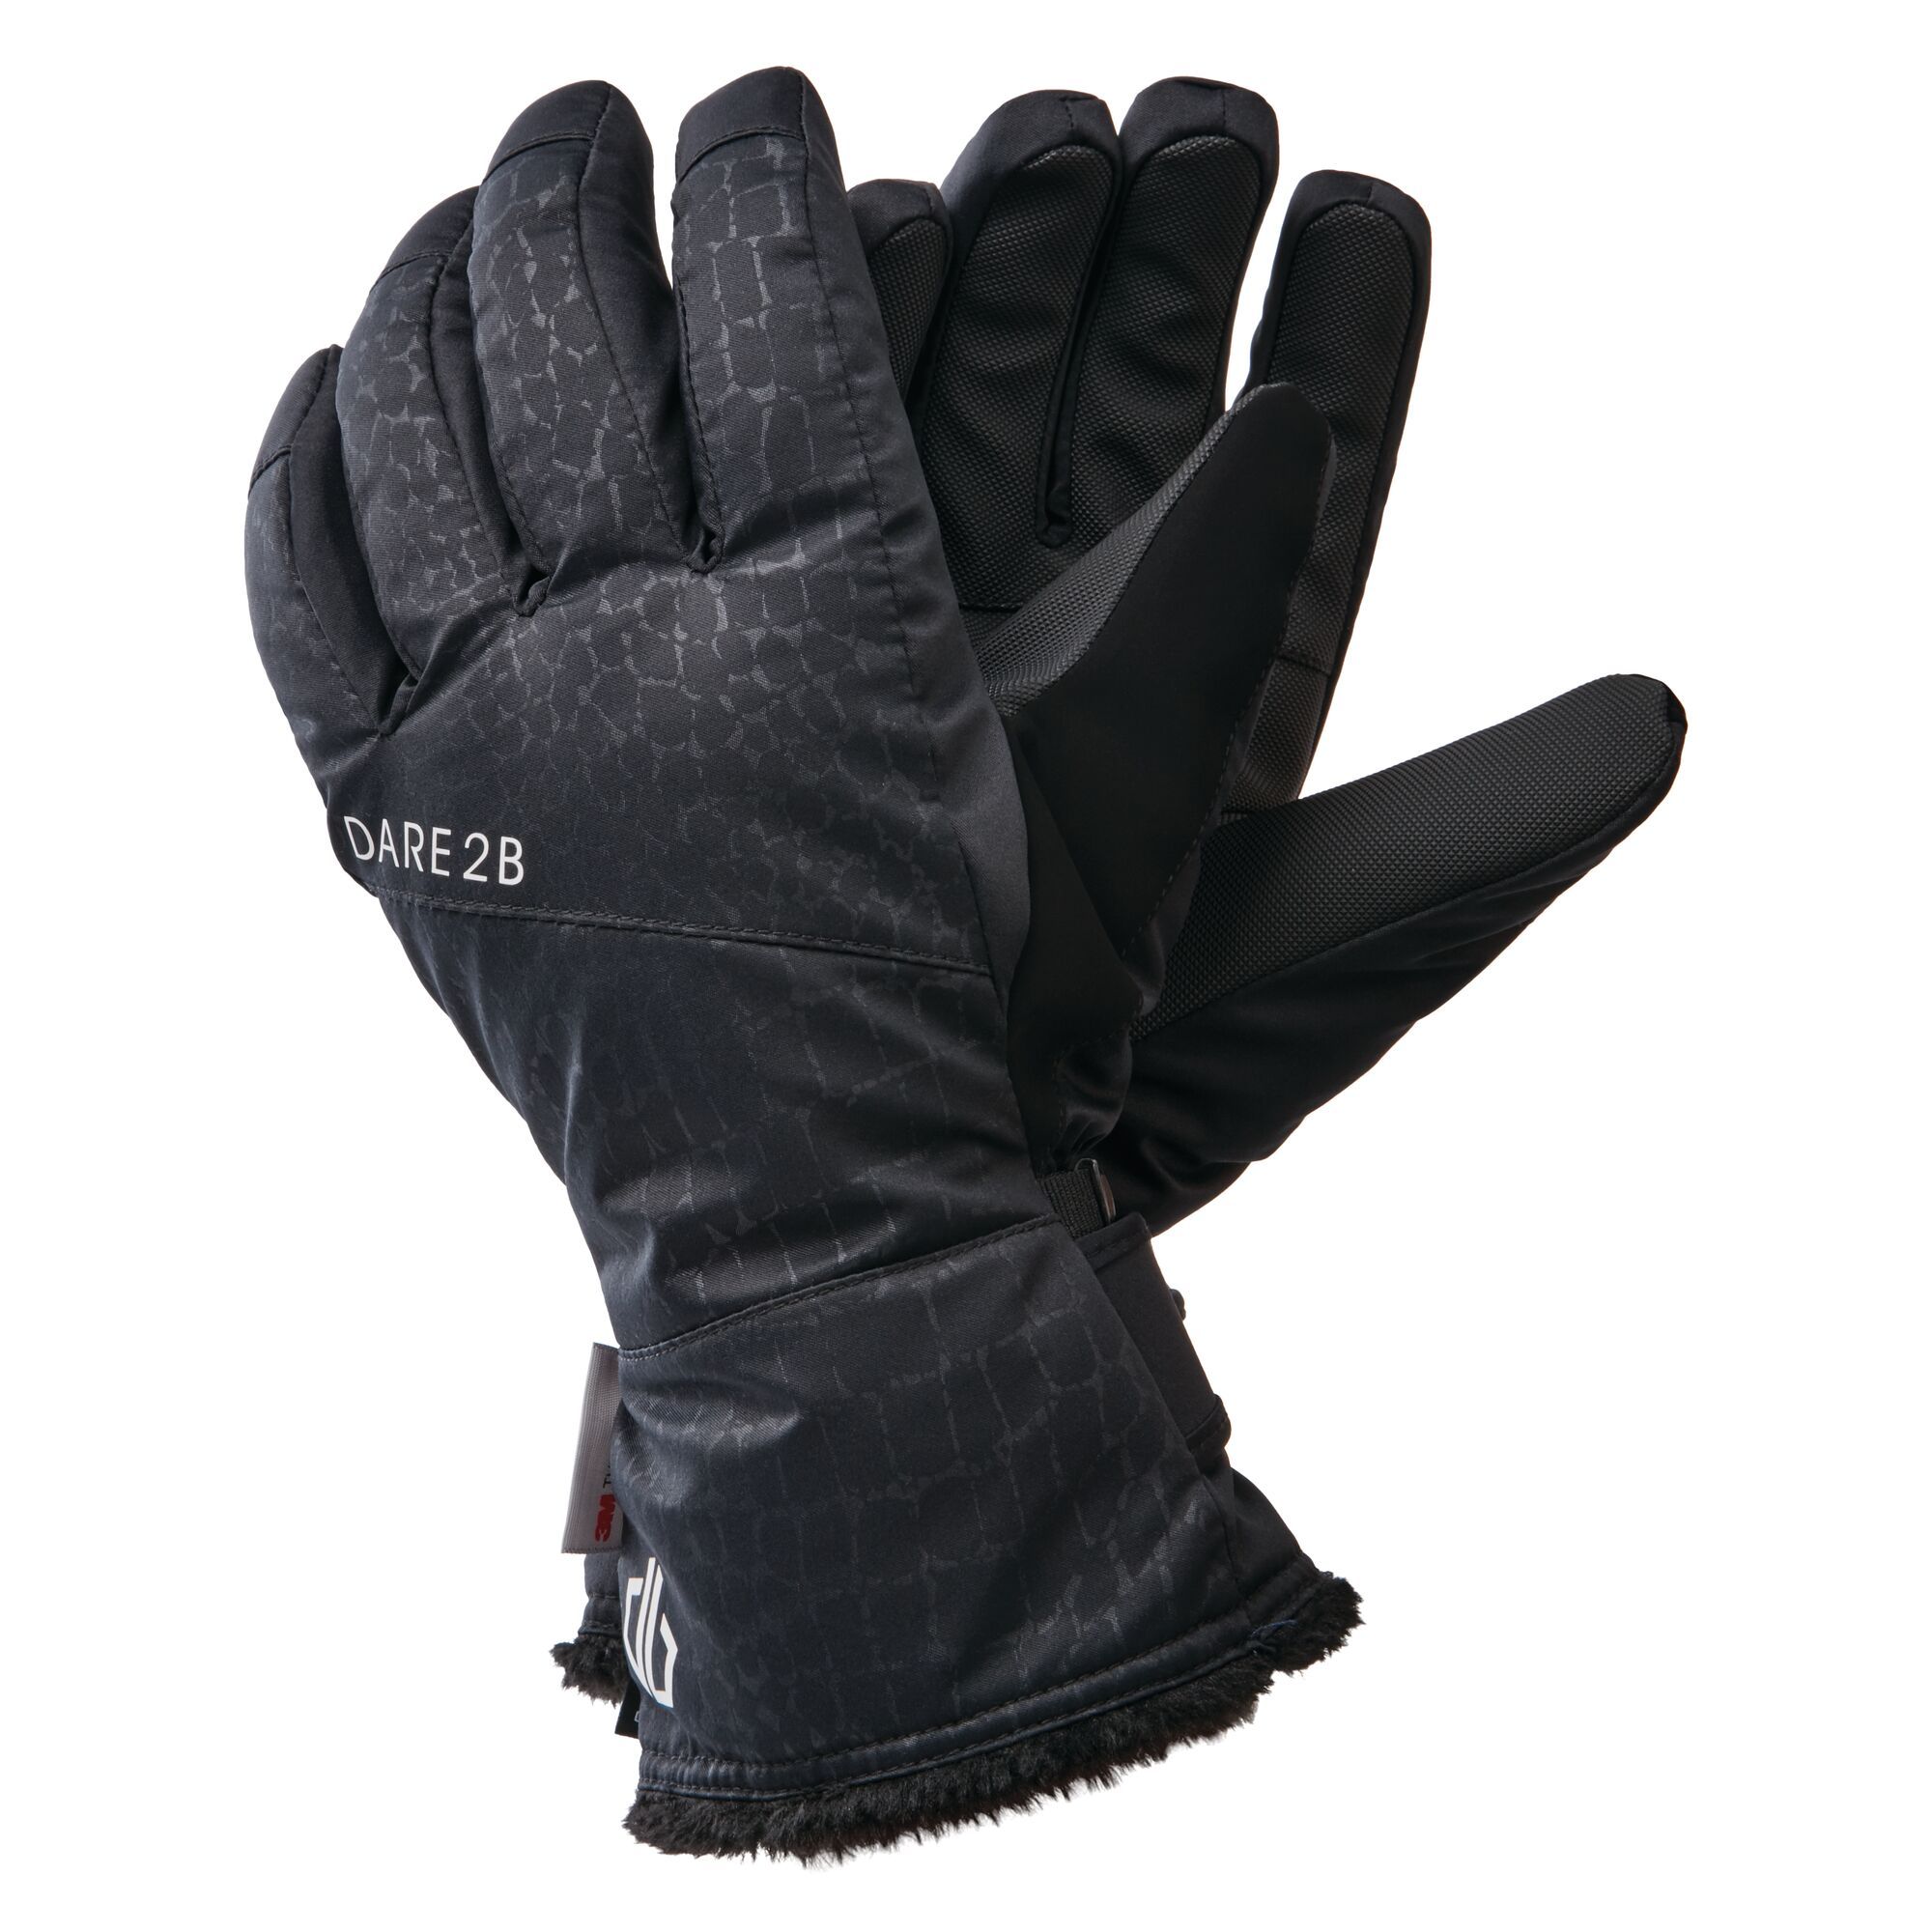 Dare2b Fleece II Polyester Warm Winter Gloves 